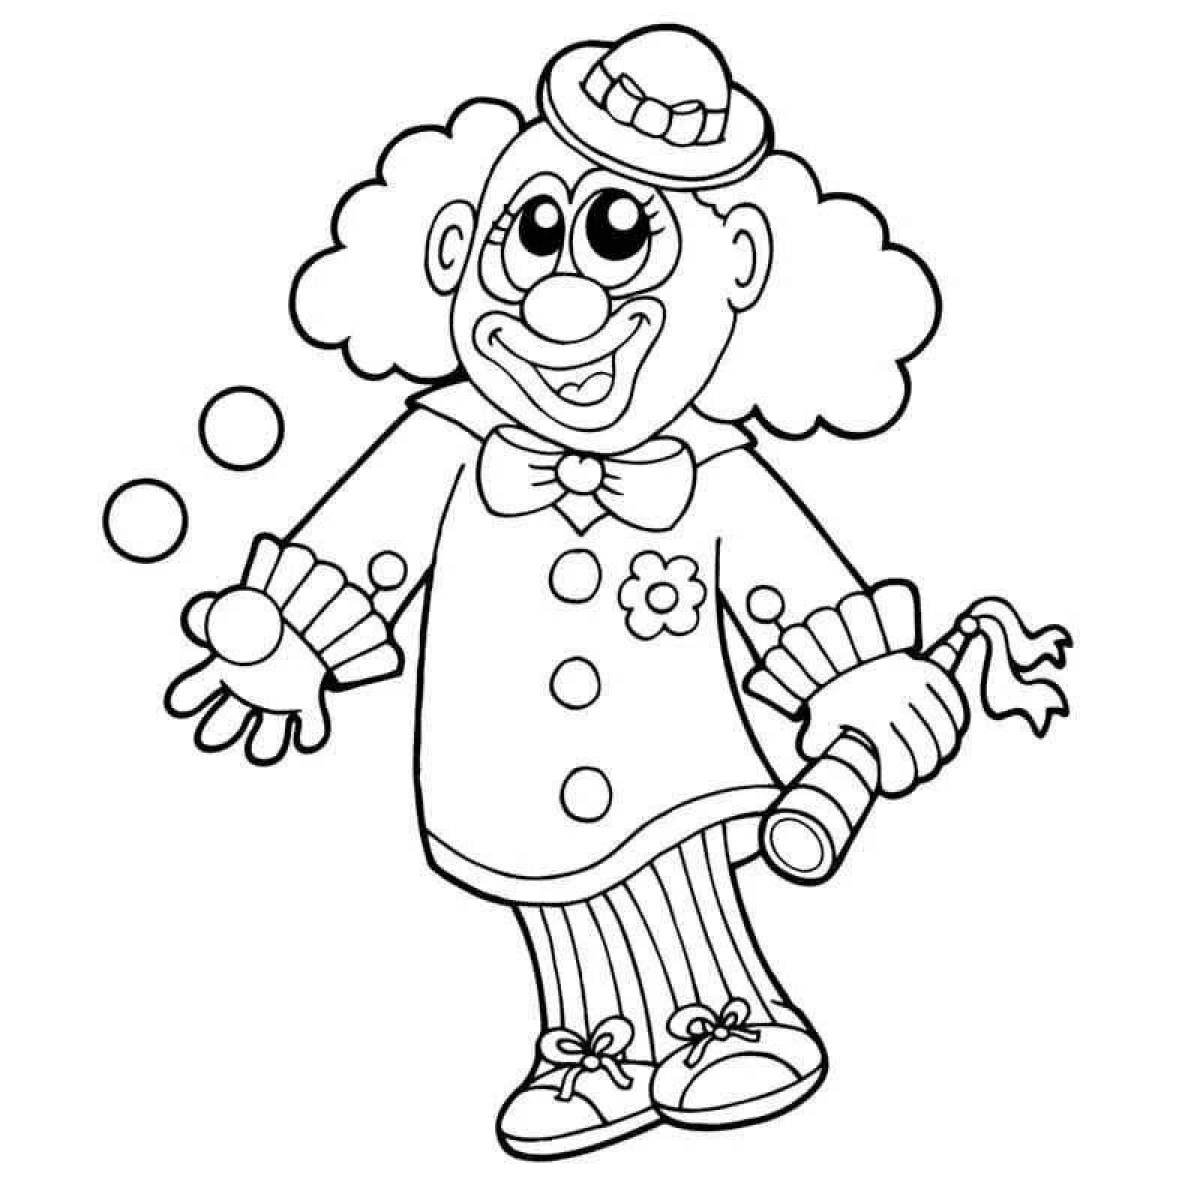 Клоун раскраска для детей 4 5 лет. Клоун раскраска. Клоун раскраска для малышей. Клоун раскраска для детей. Раскраски клоуны для детей 5-6 лет.